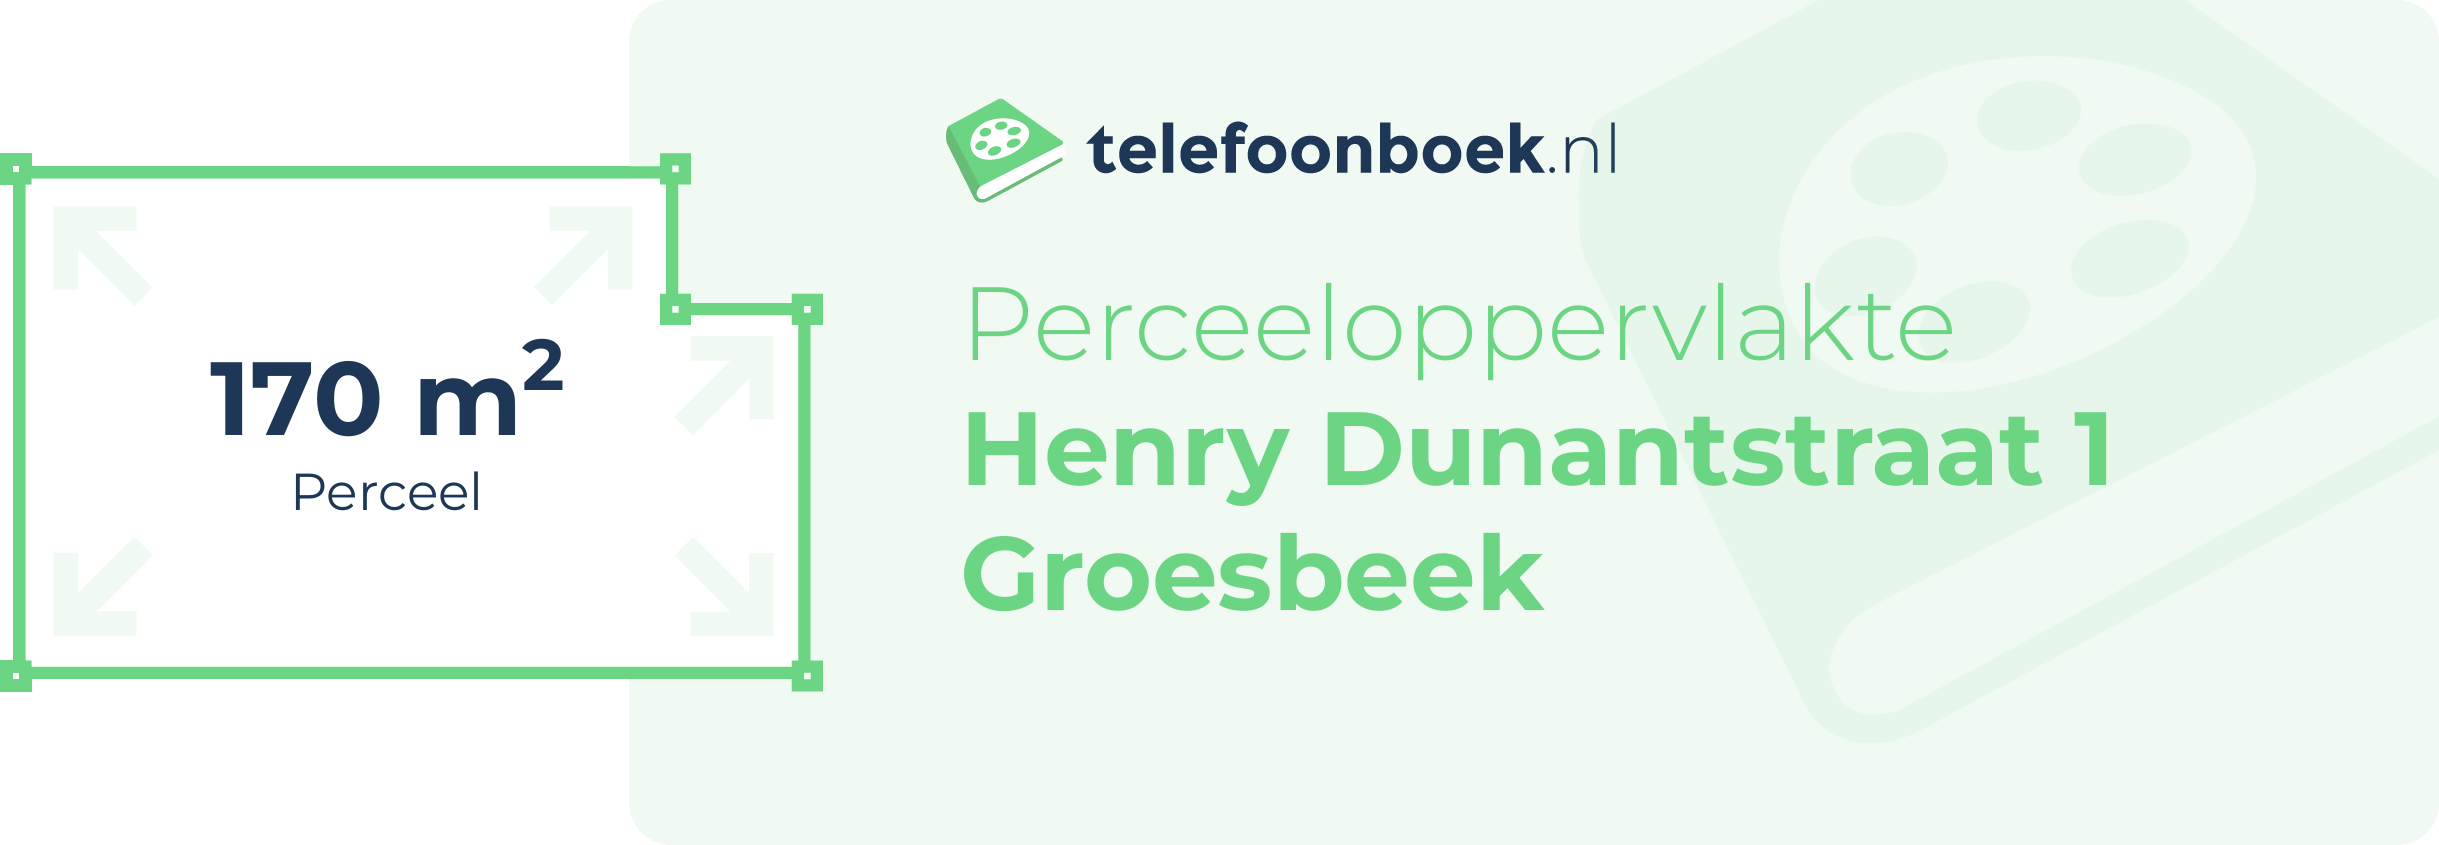 Perceeloppervlakte Henry Dunantstraat 1 Groesbeek